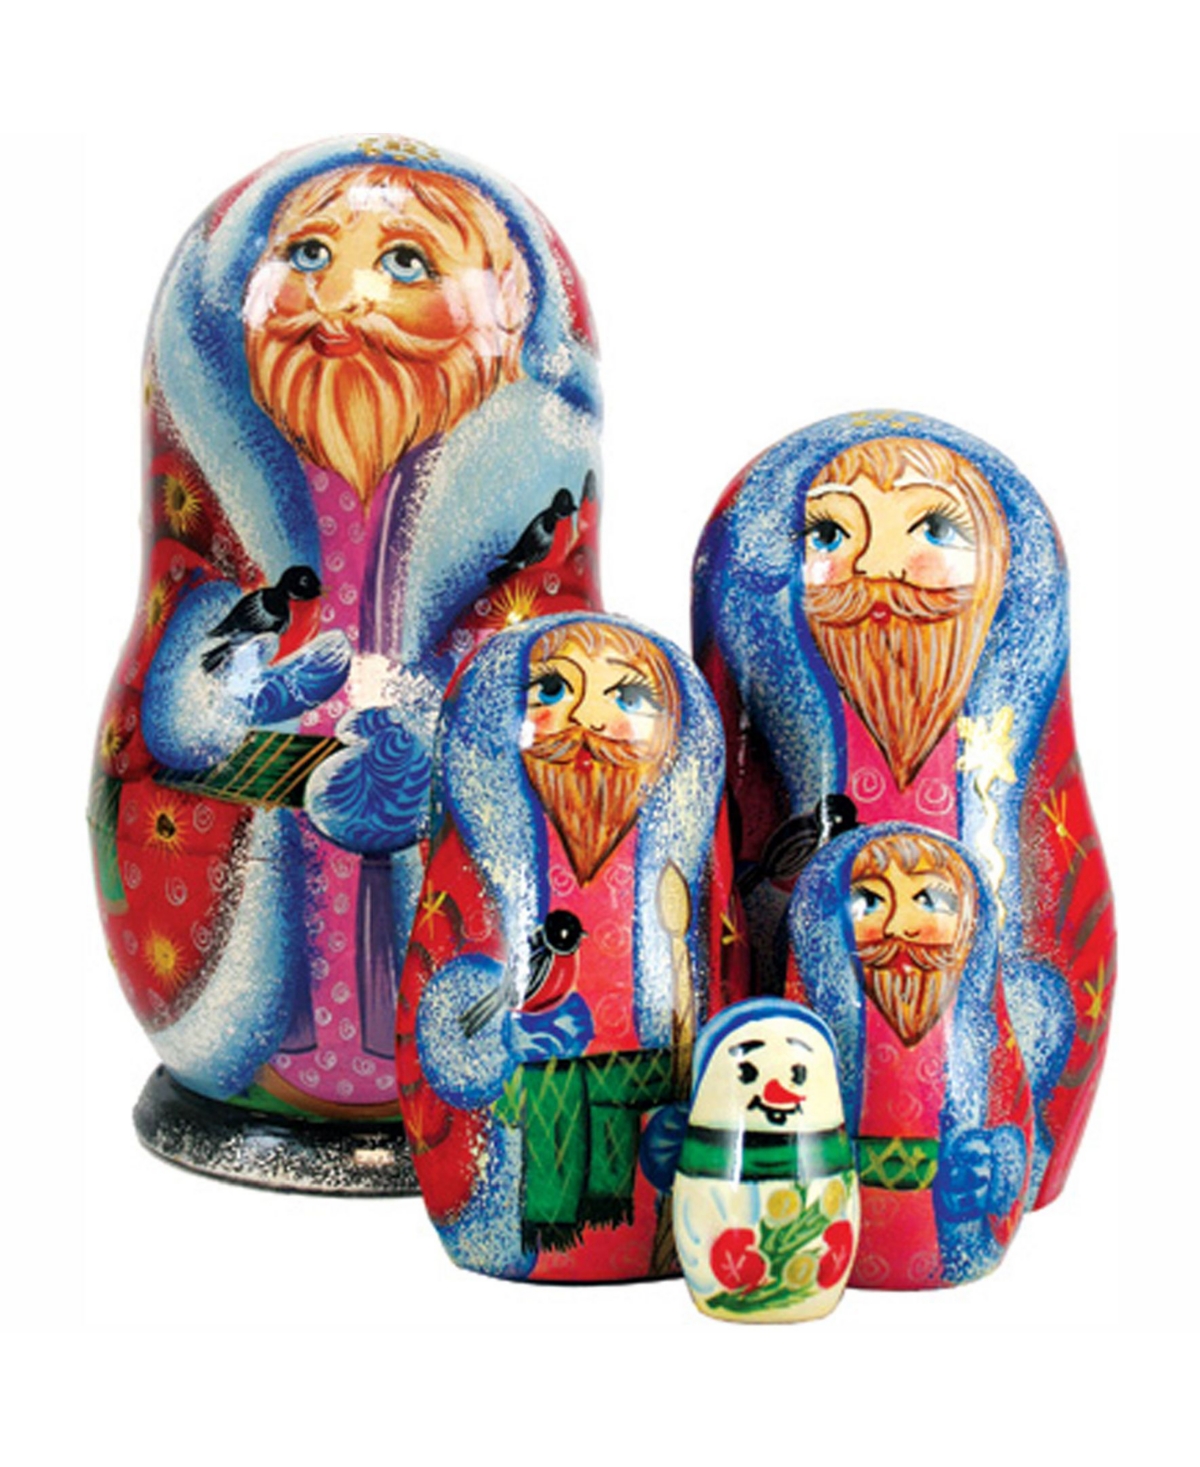 5-Piece Santa Bird Lower Russian Matryoshka Nested Doll Set - Multi